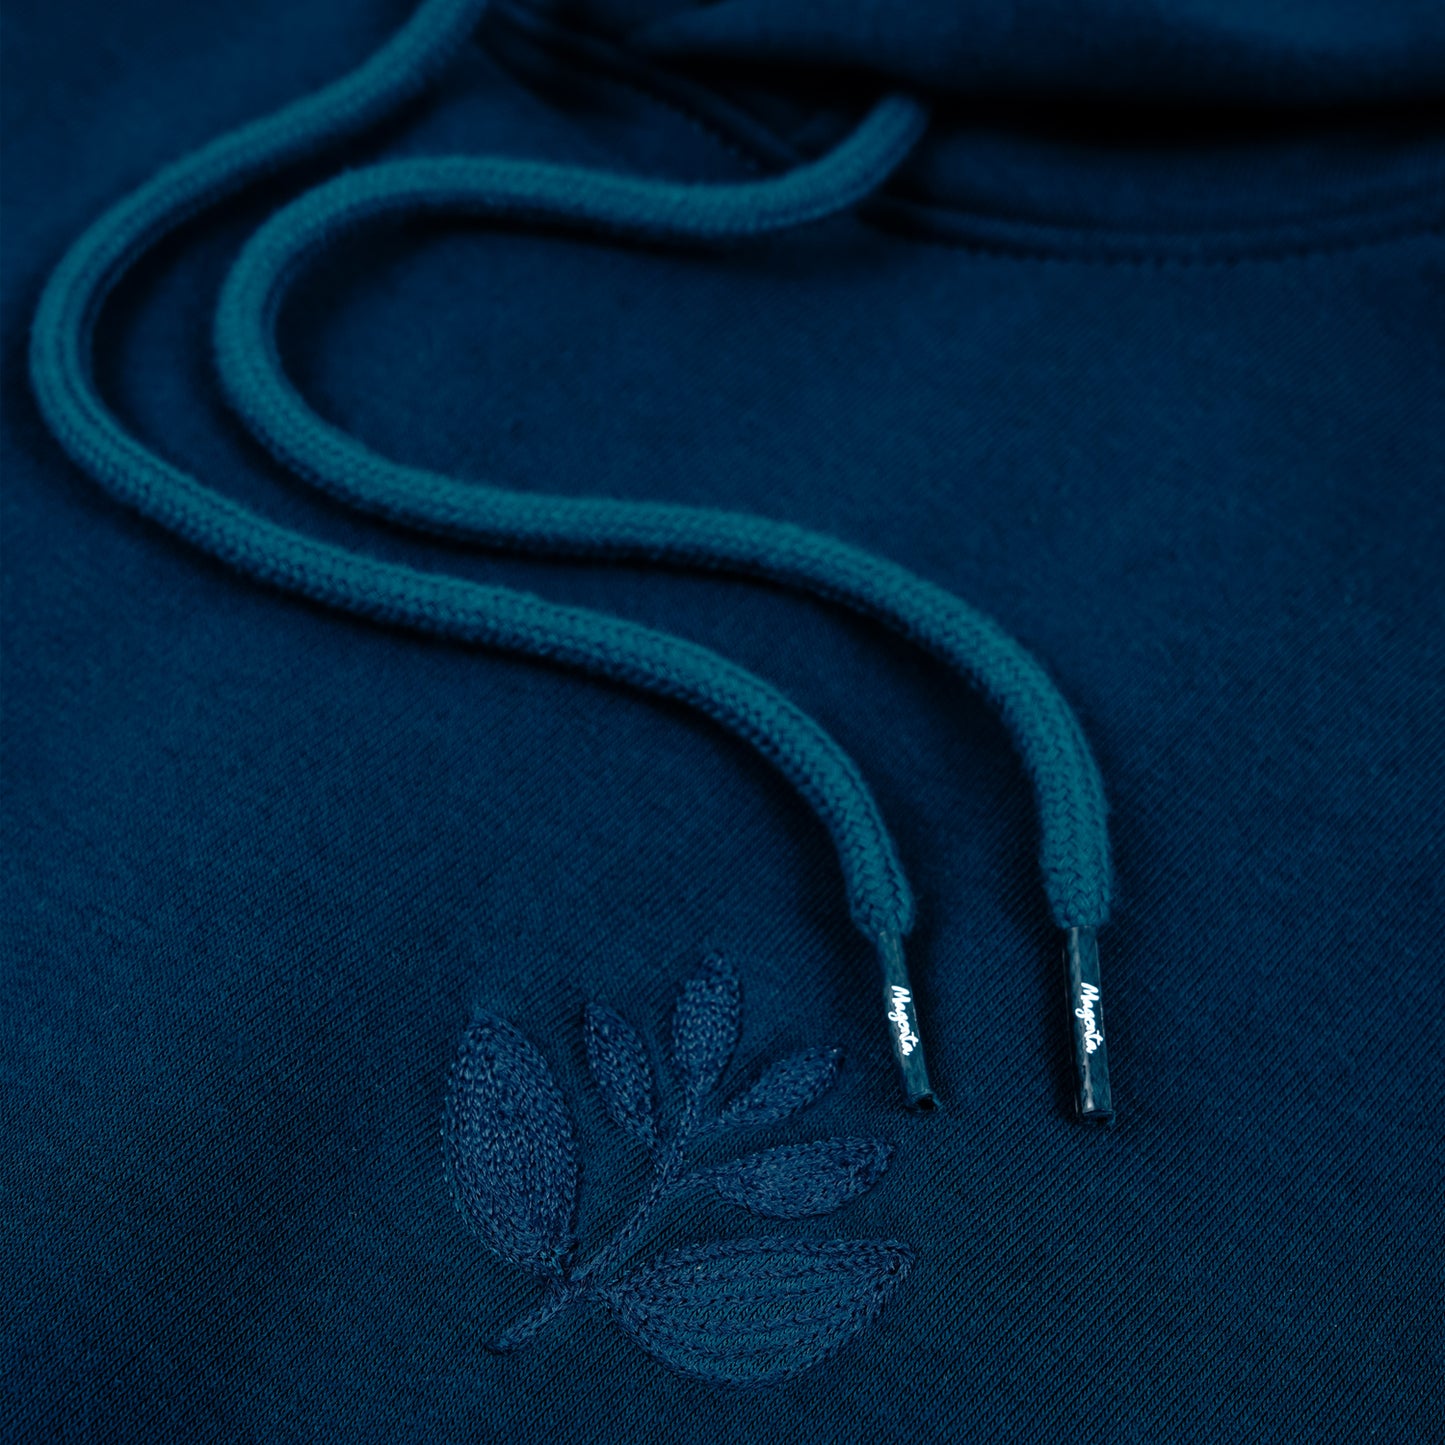 Magenta Hill Embro hoodie petrol blue